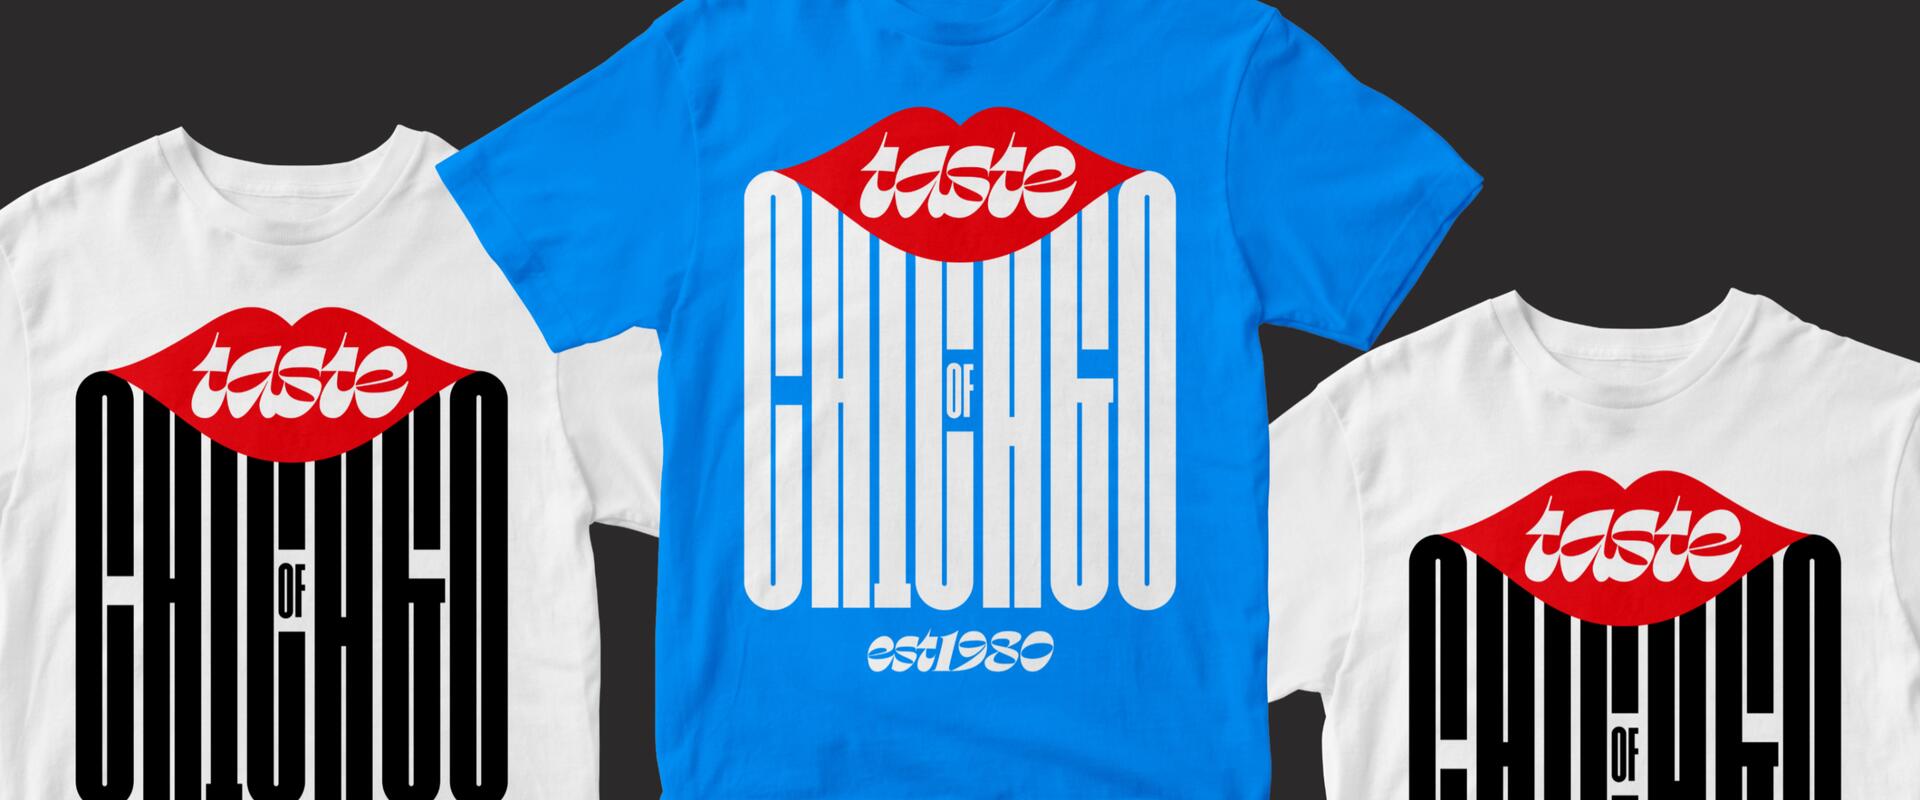 22B-15_Taste of Chicago Branding_Nick Adam